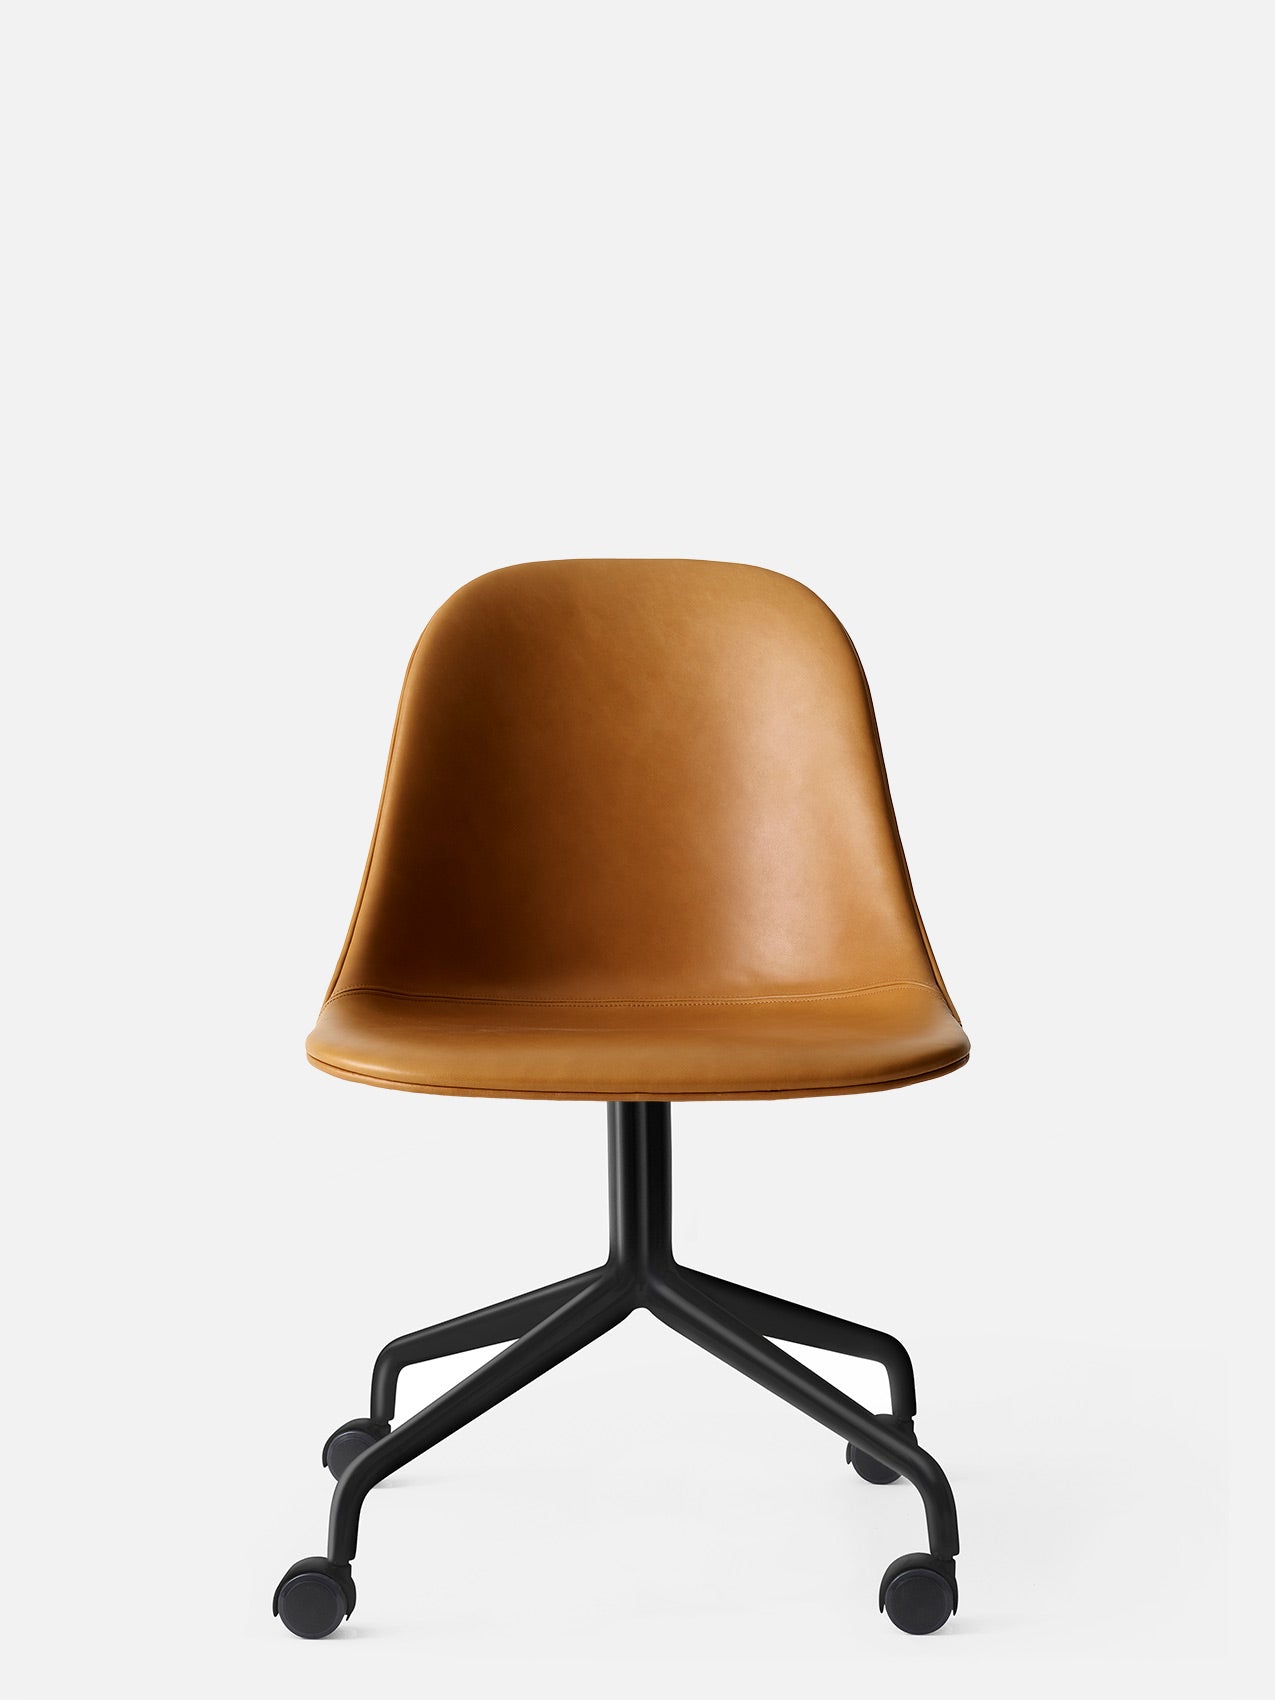 Harbour Side Chair, Upholstered-Chair-Norm Architects-Star Base (Seat 17.7in H)/Black Steel w. Casters-0250 Cognac/Dakar-menu-minimalist-modern-danish-design-home-decor